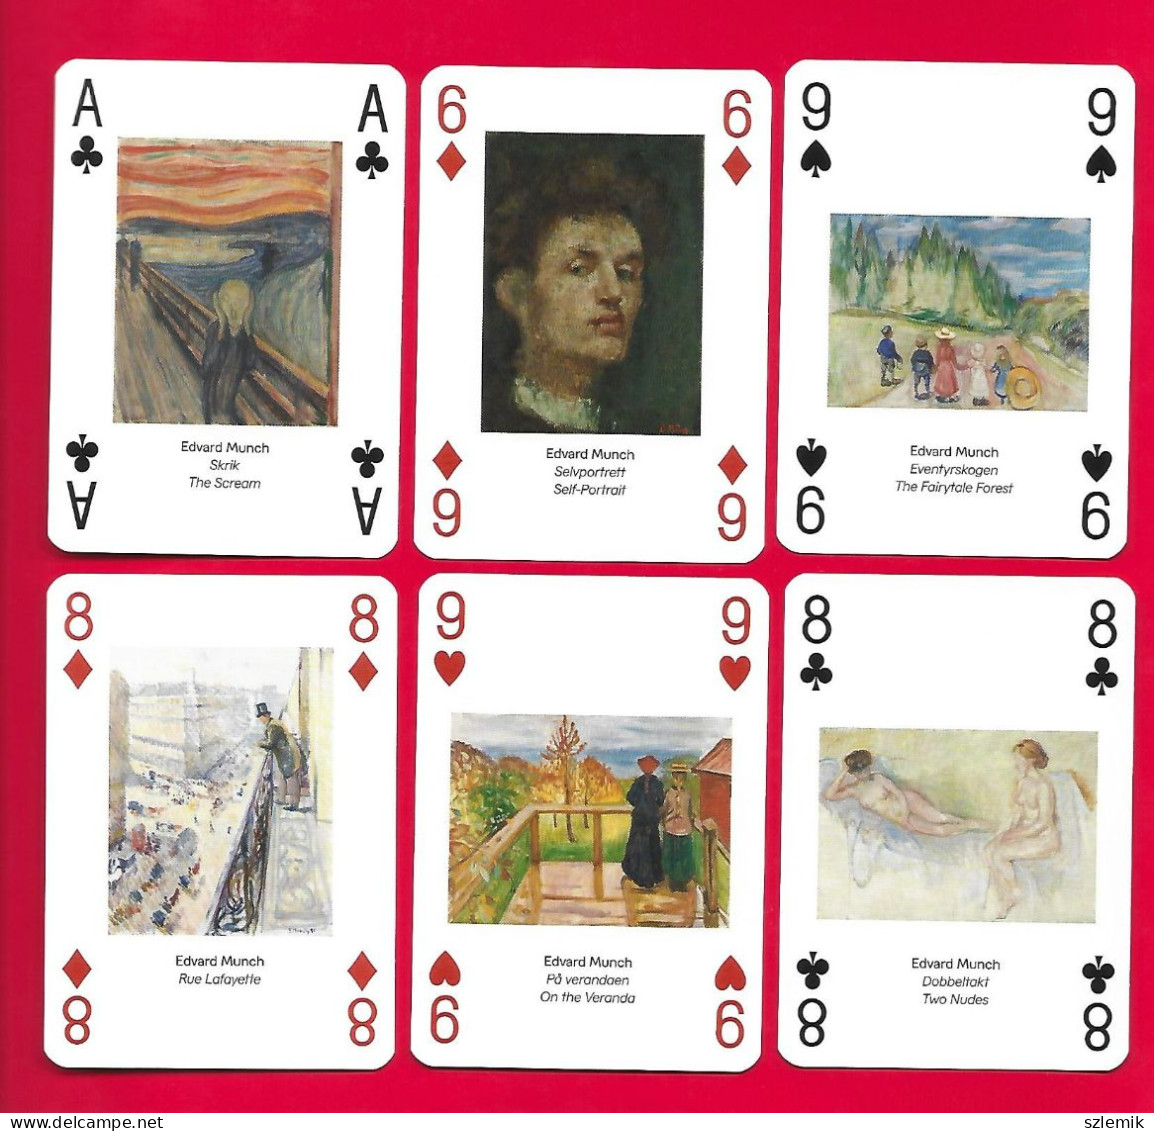 Playing Cards 52 + 3 Jokers. Nacjonalmuseet   OSLO  (MUNCH),  TREFL For Norwey - 2023. Size POKER - 54 Cartes